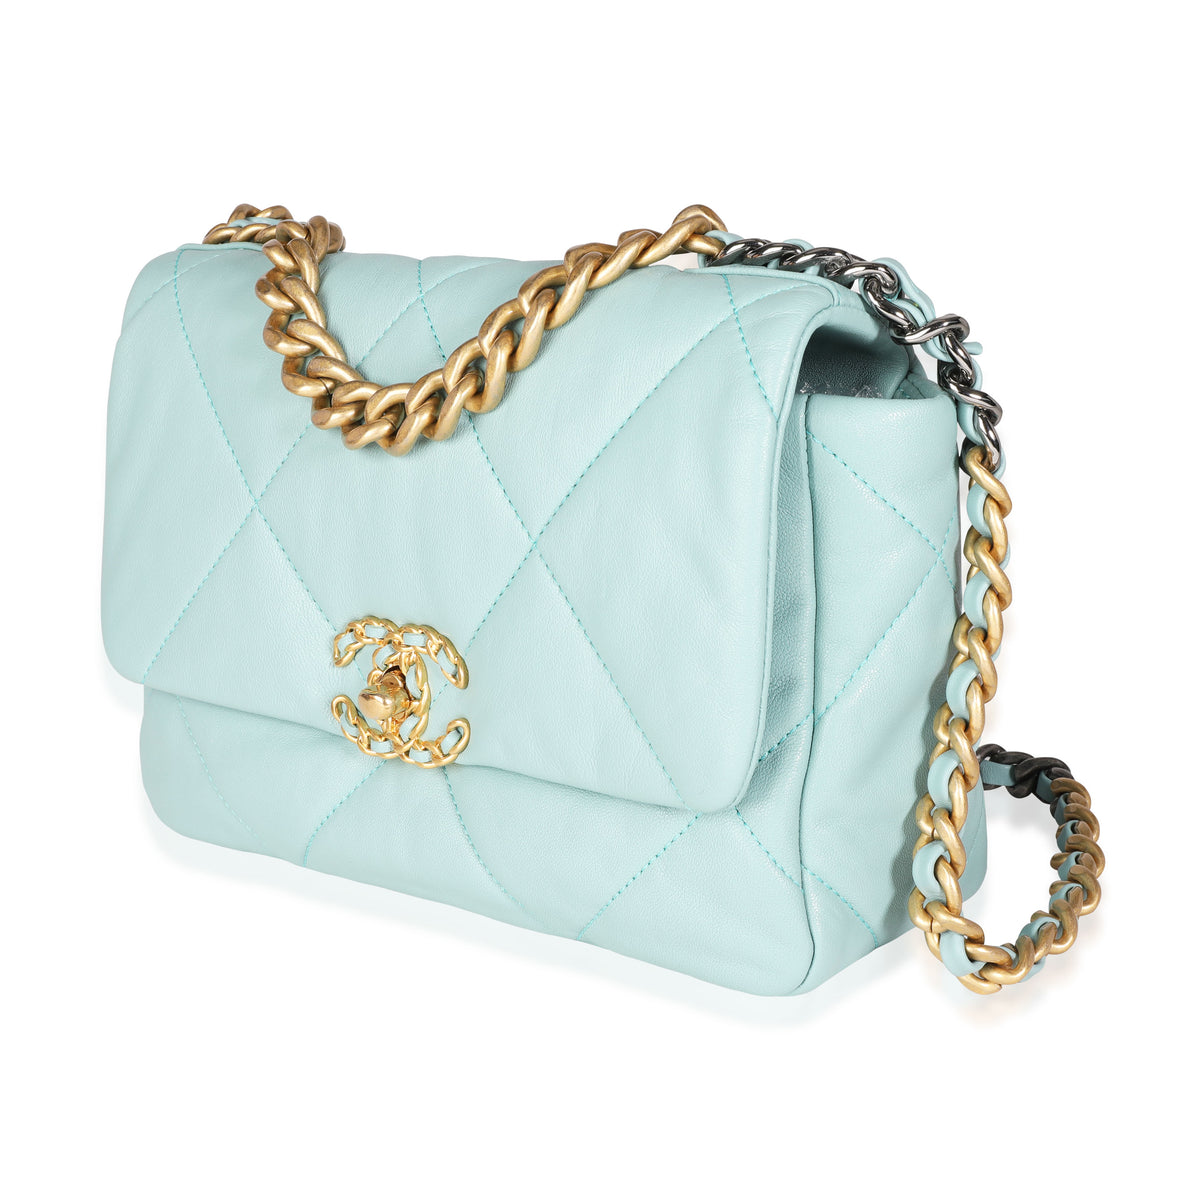 Chanel Pale Blue Quilted Lambskin Medium Chanel 19 Bag, myGemma, AU